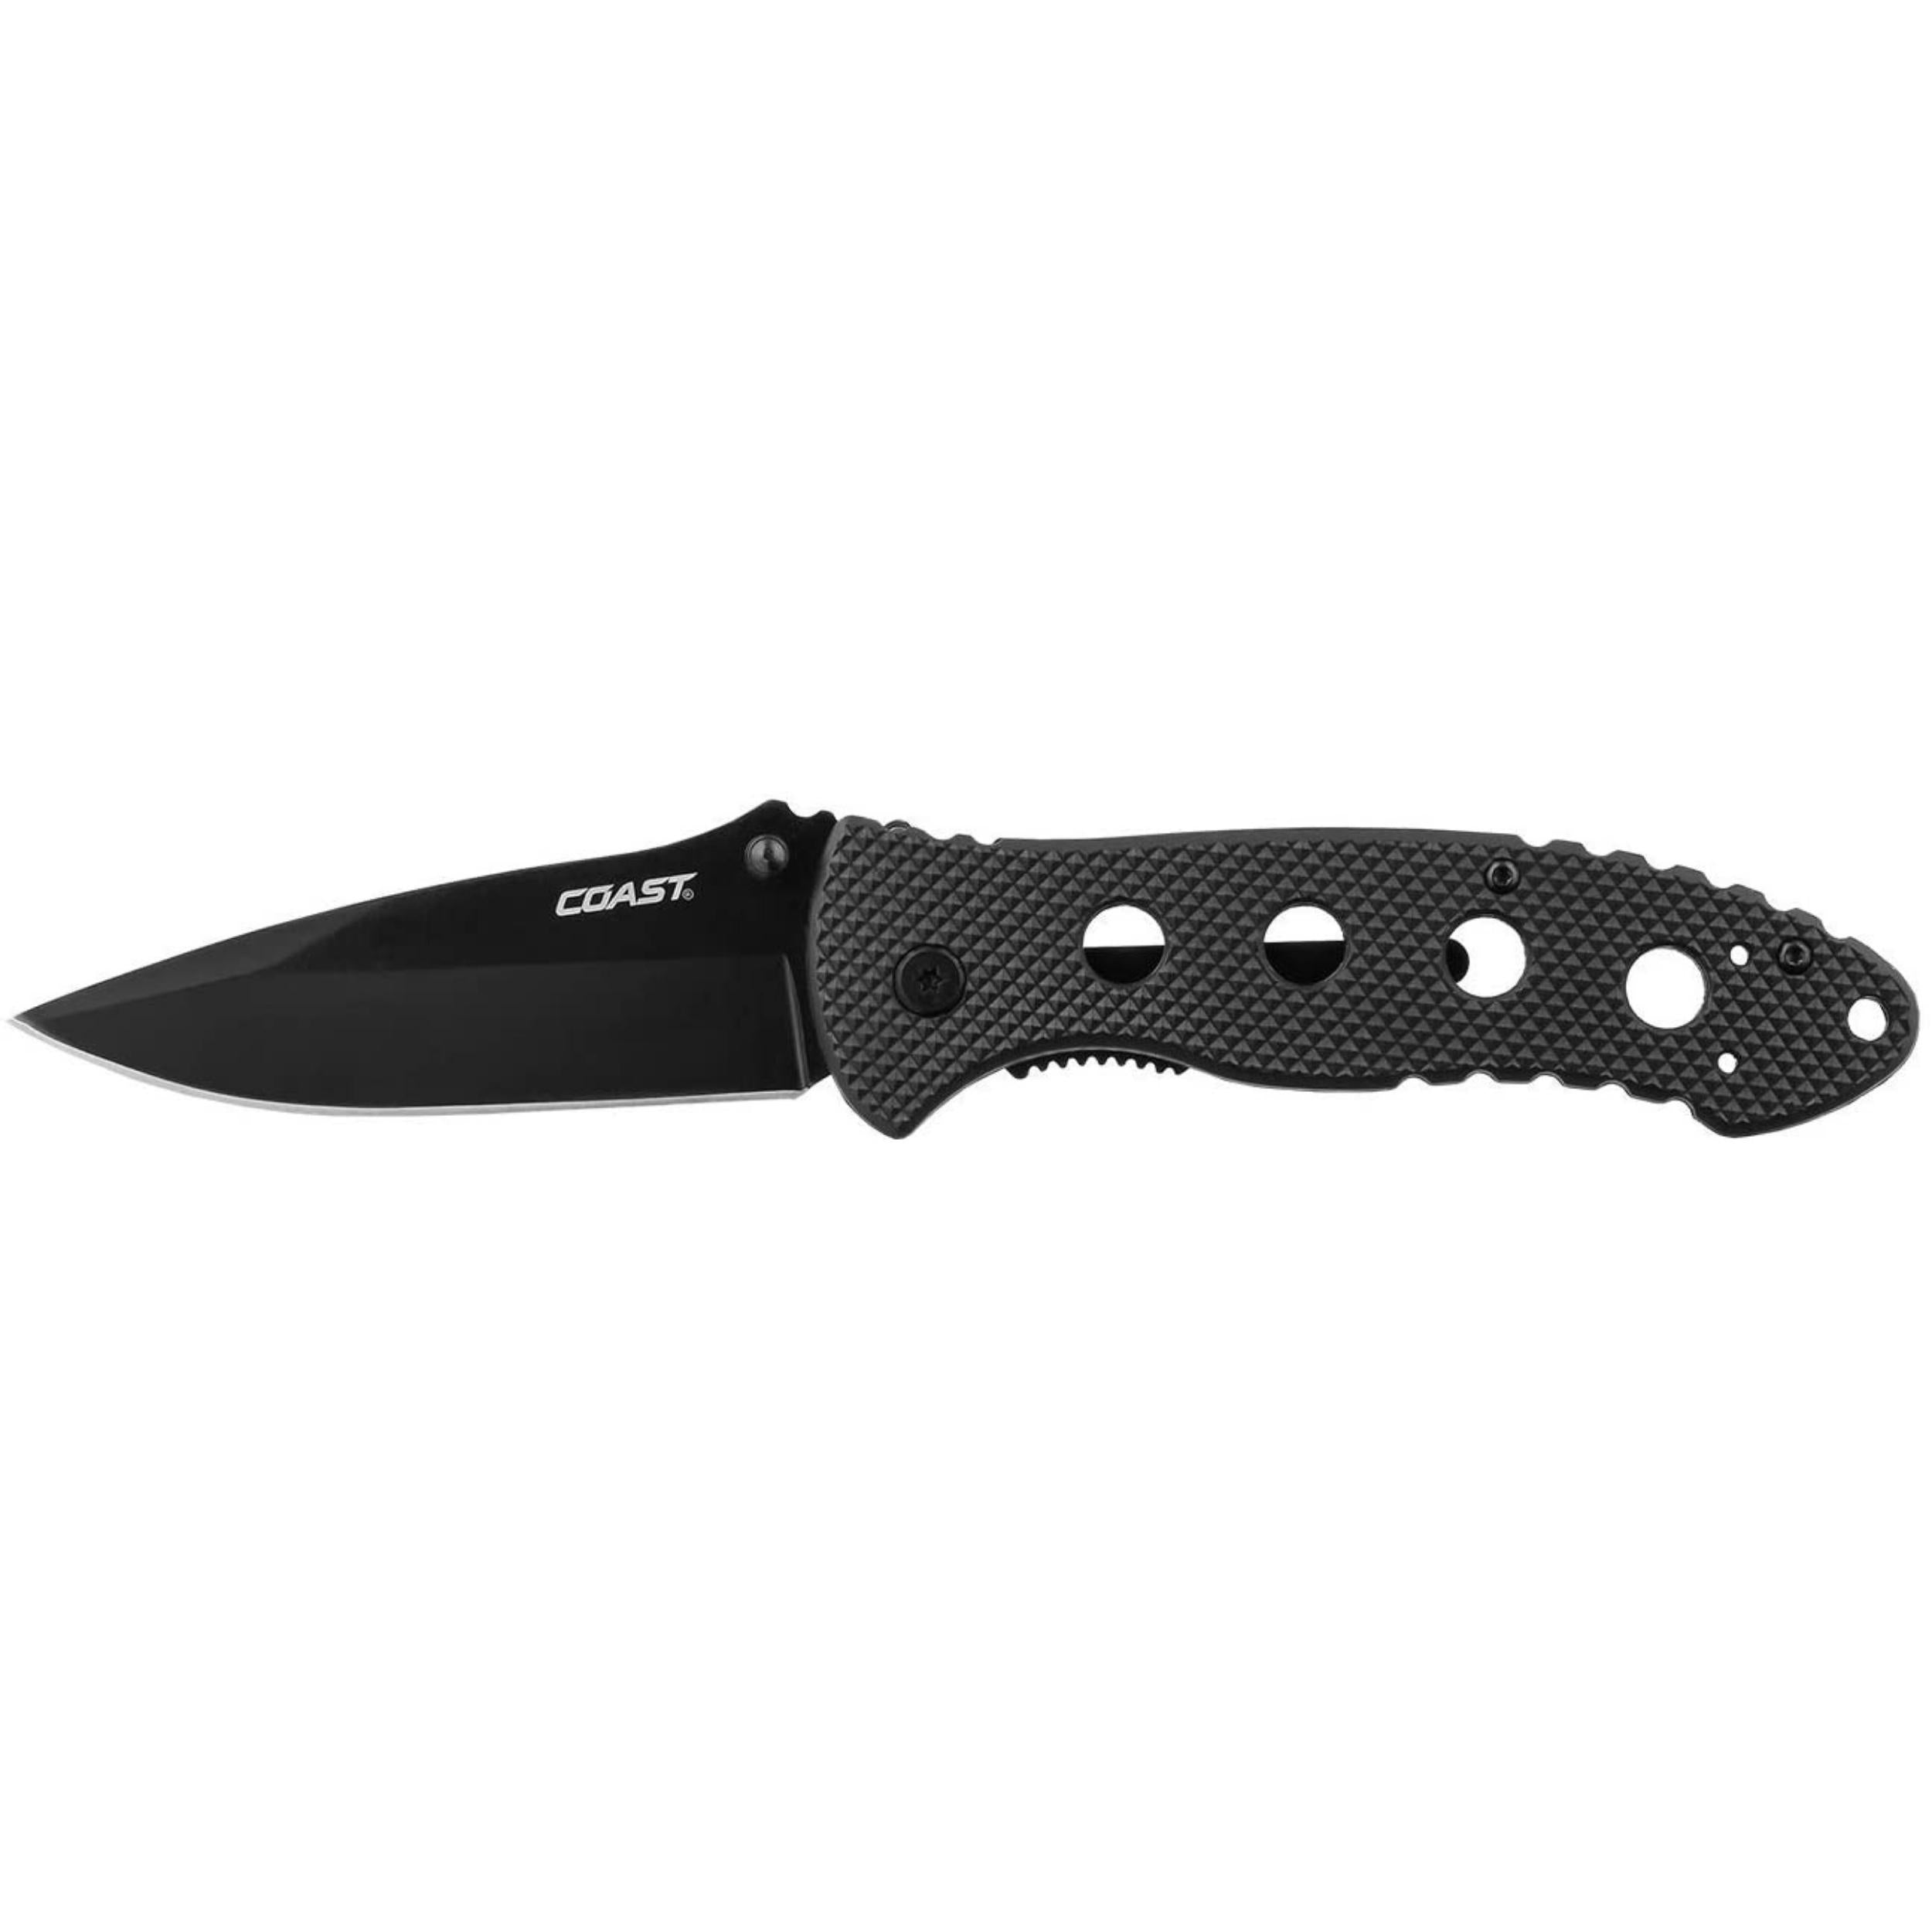 Coast DX340 Double Lock Folding Knife - 3.5" Blade